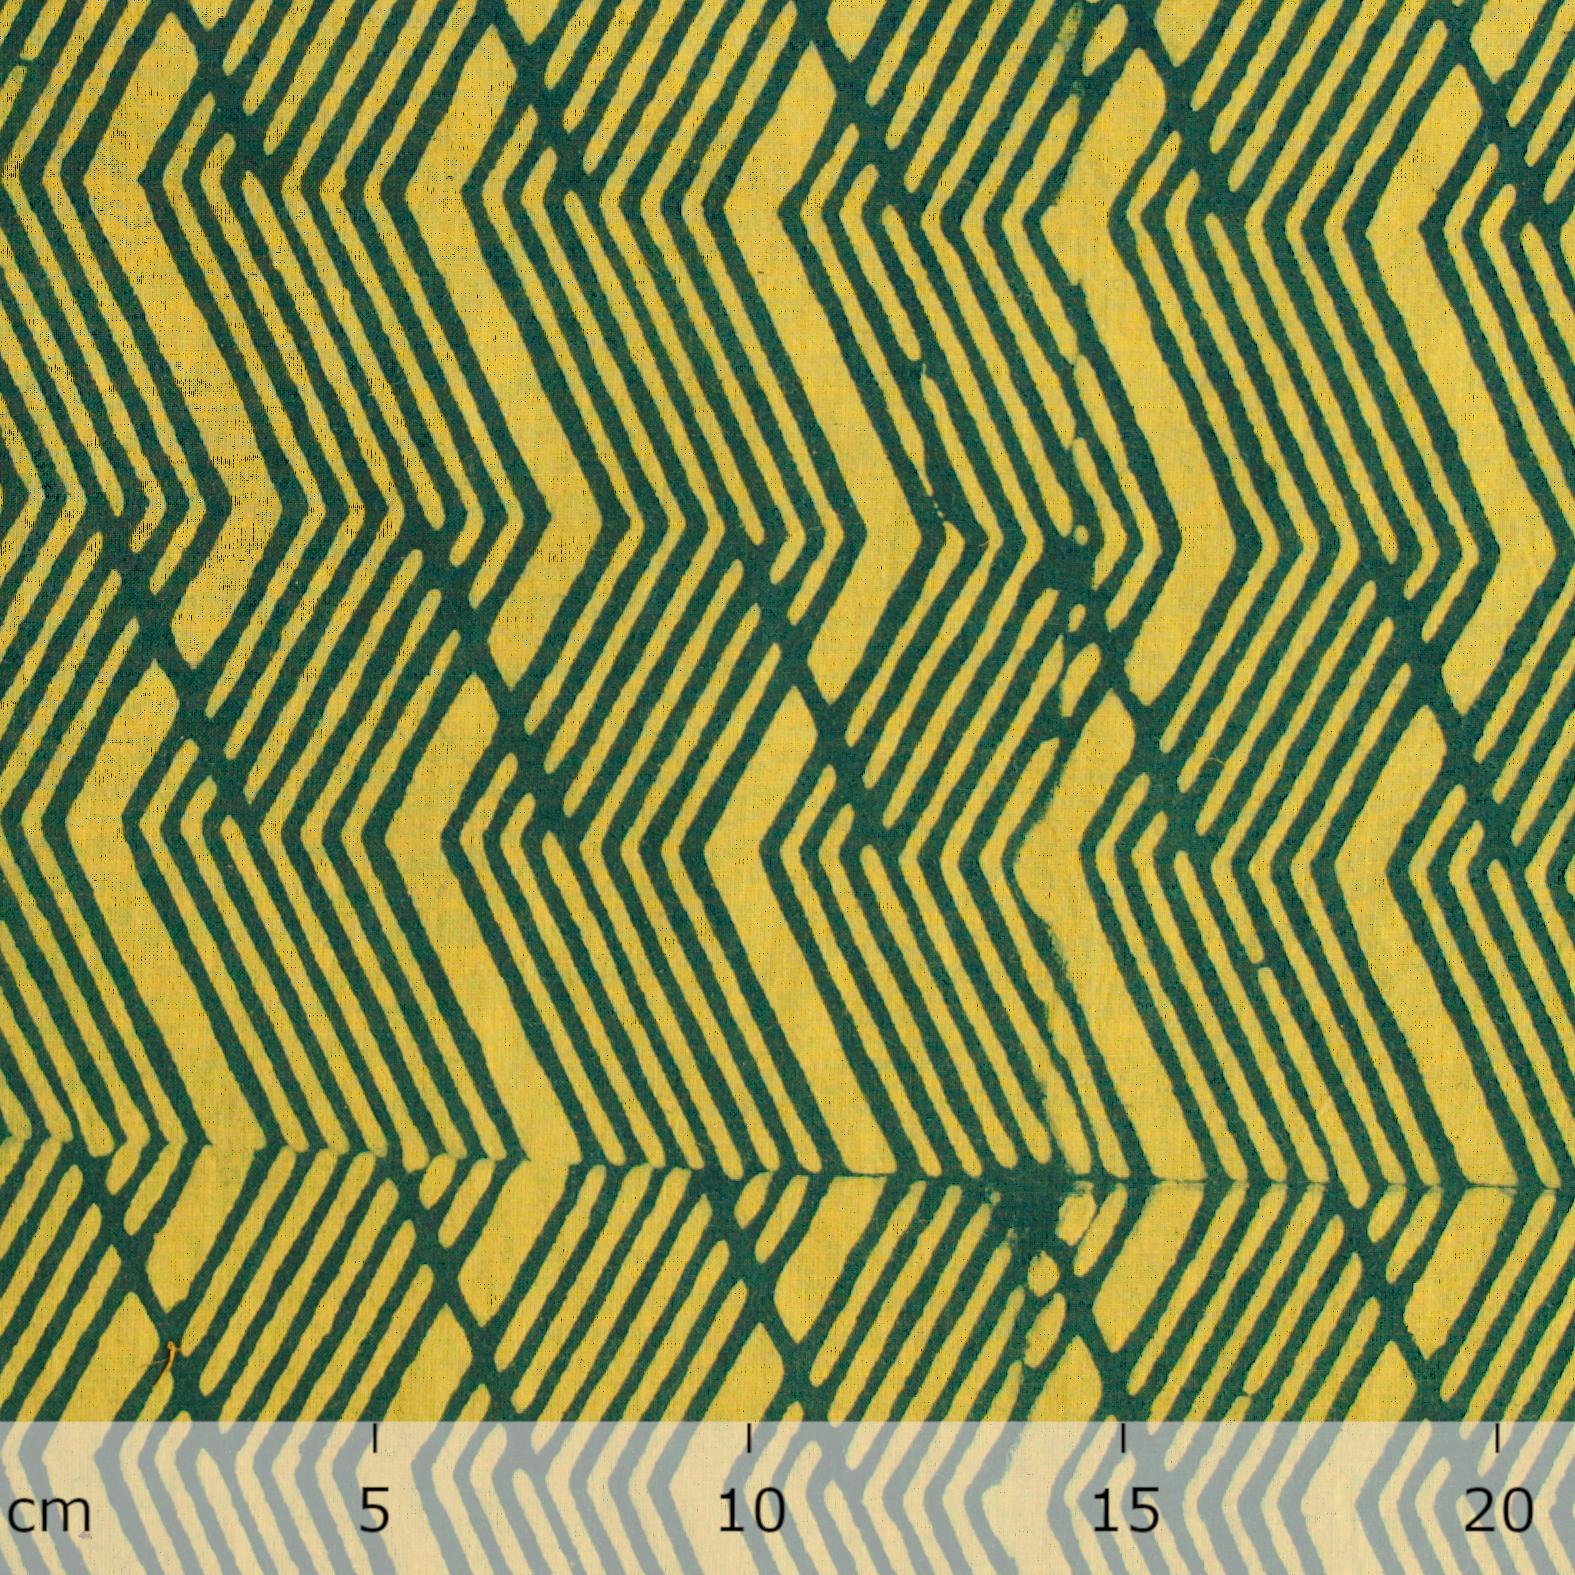 4 - SIK52 - Hand Block-Printed Cotton - Wabisabi Wave Design - Yellow & Green Dye - Ruler